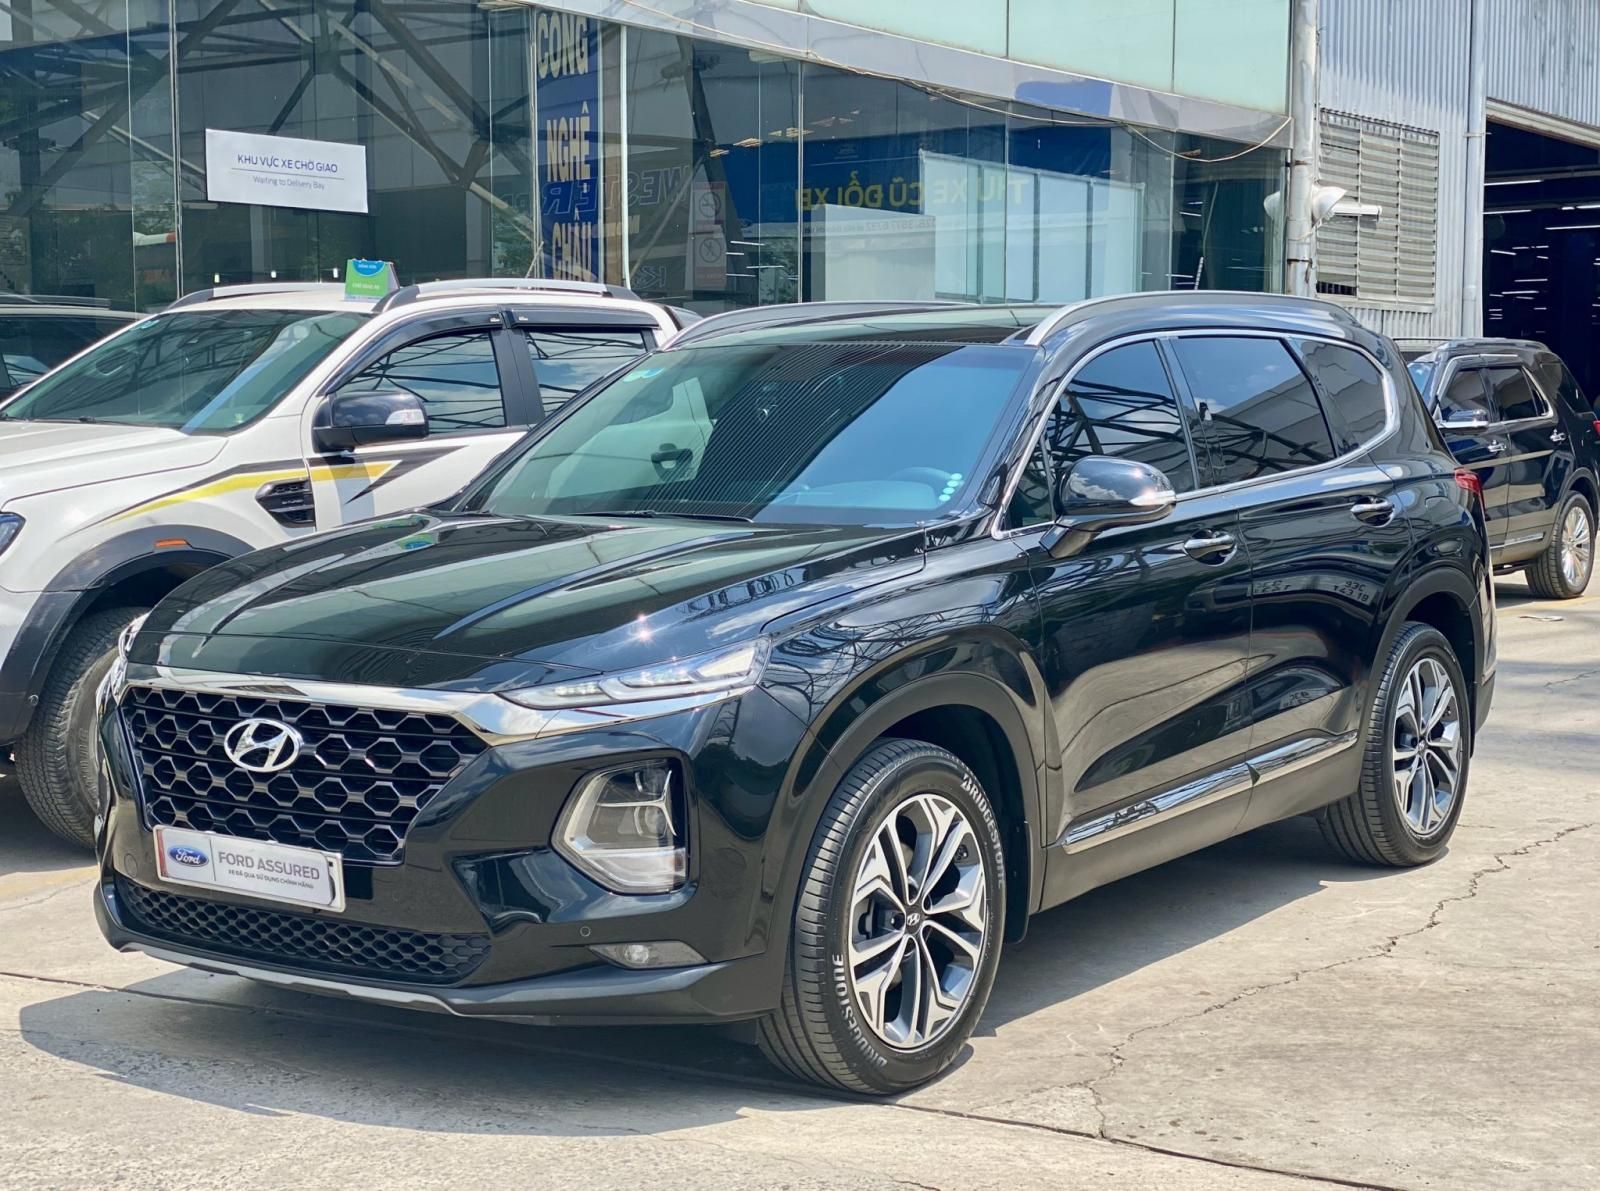 Hyundai Santa Fe 2020 - Giảm giá sập sàn